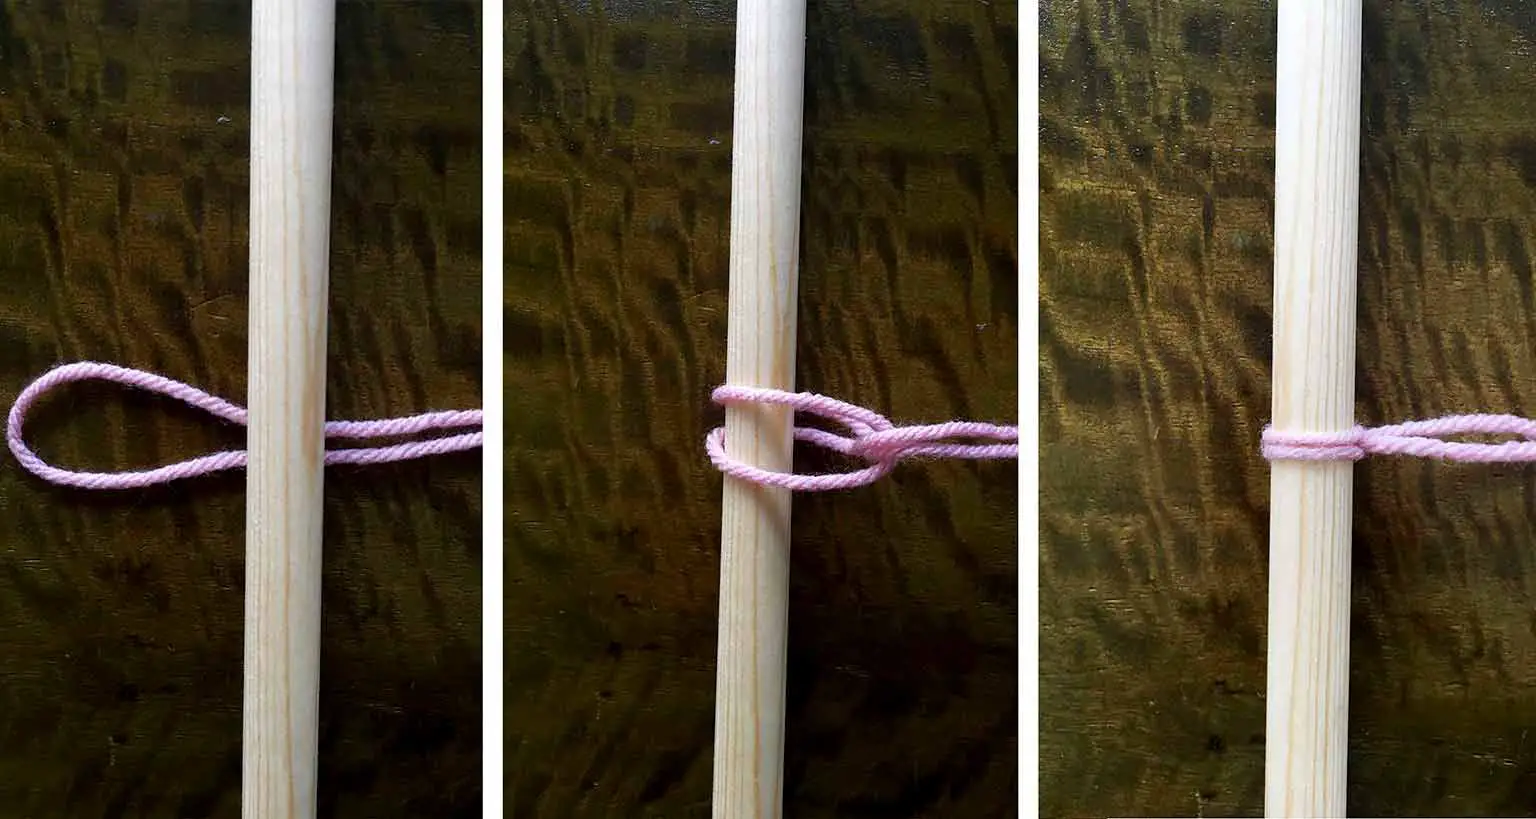 process of tying yarn onto wooden dowel